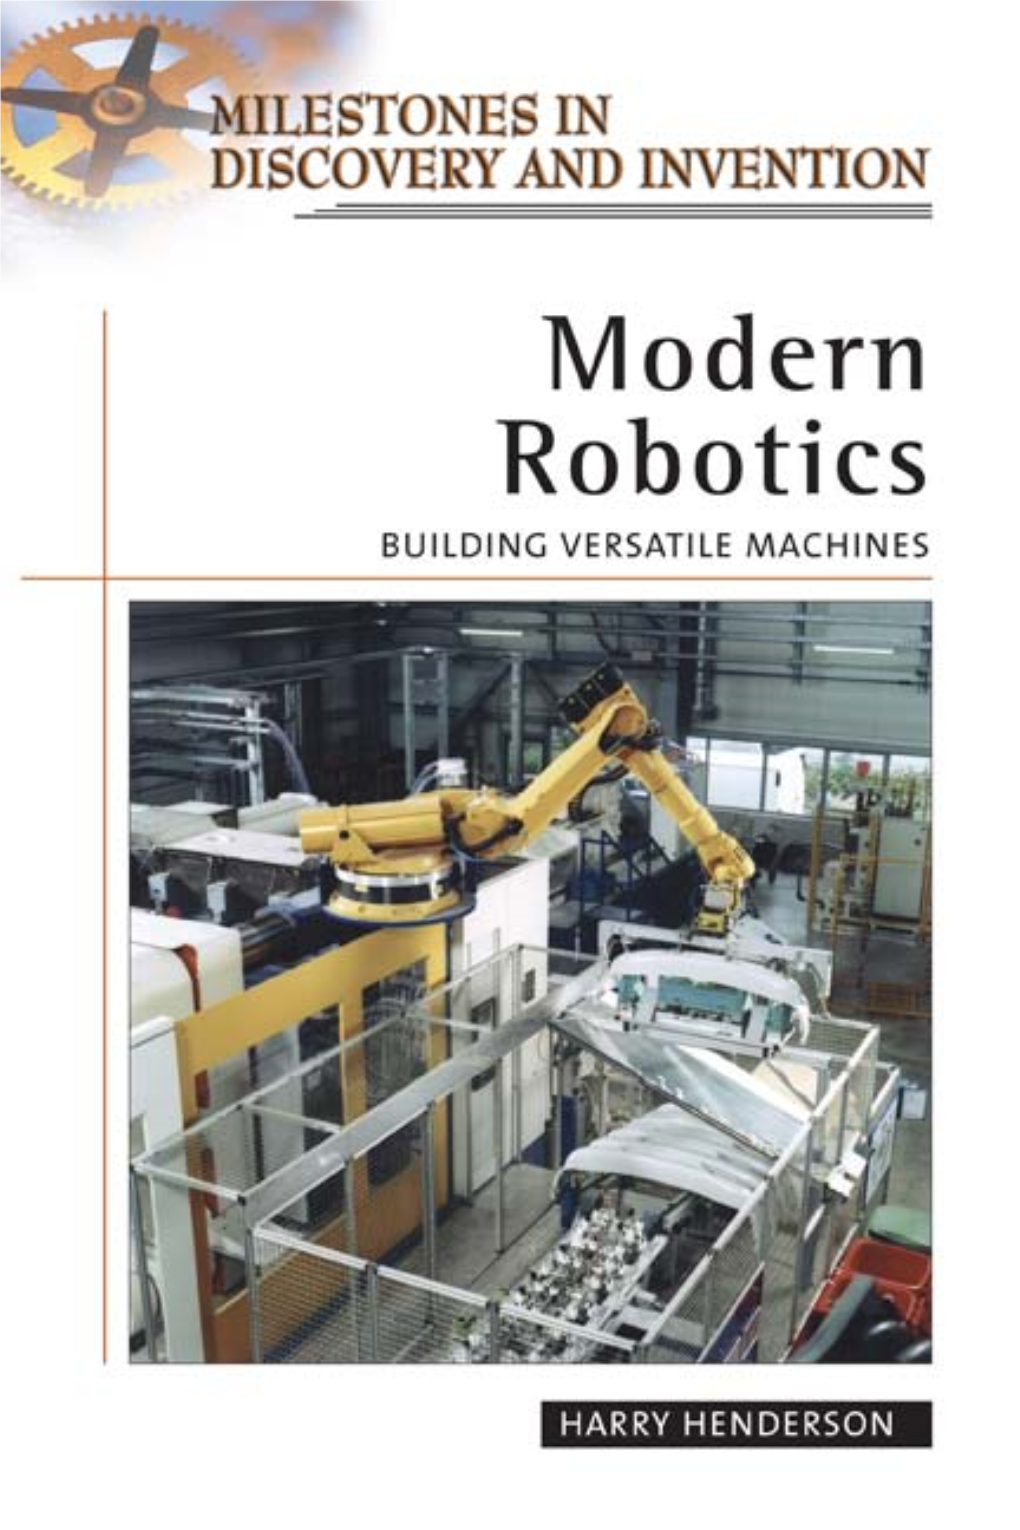 Modern Robotics- Building Versatile Machines